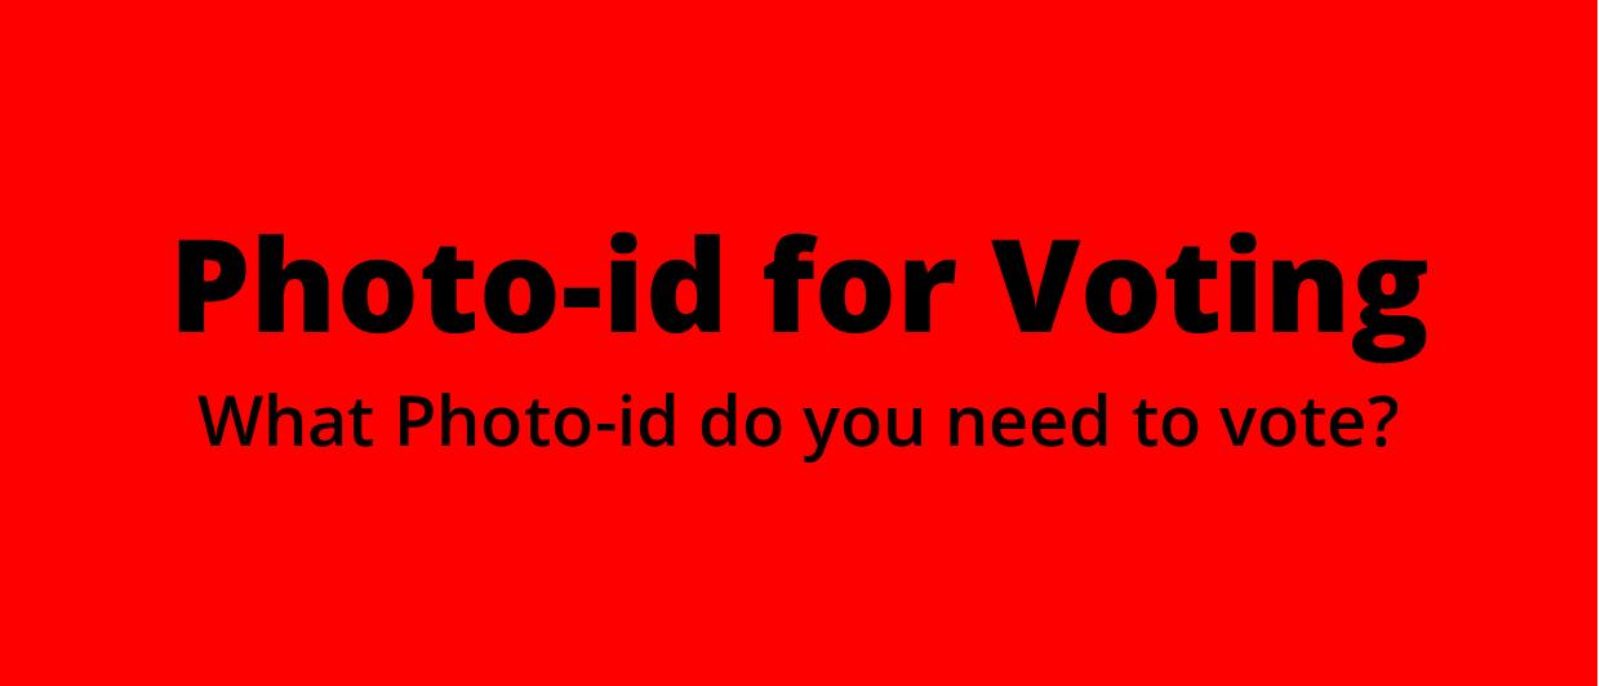 Photo-id to Vote